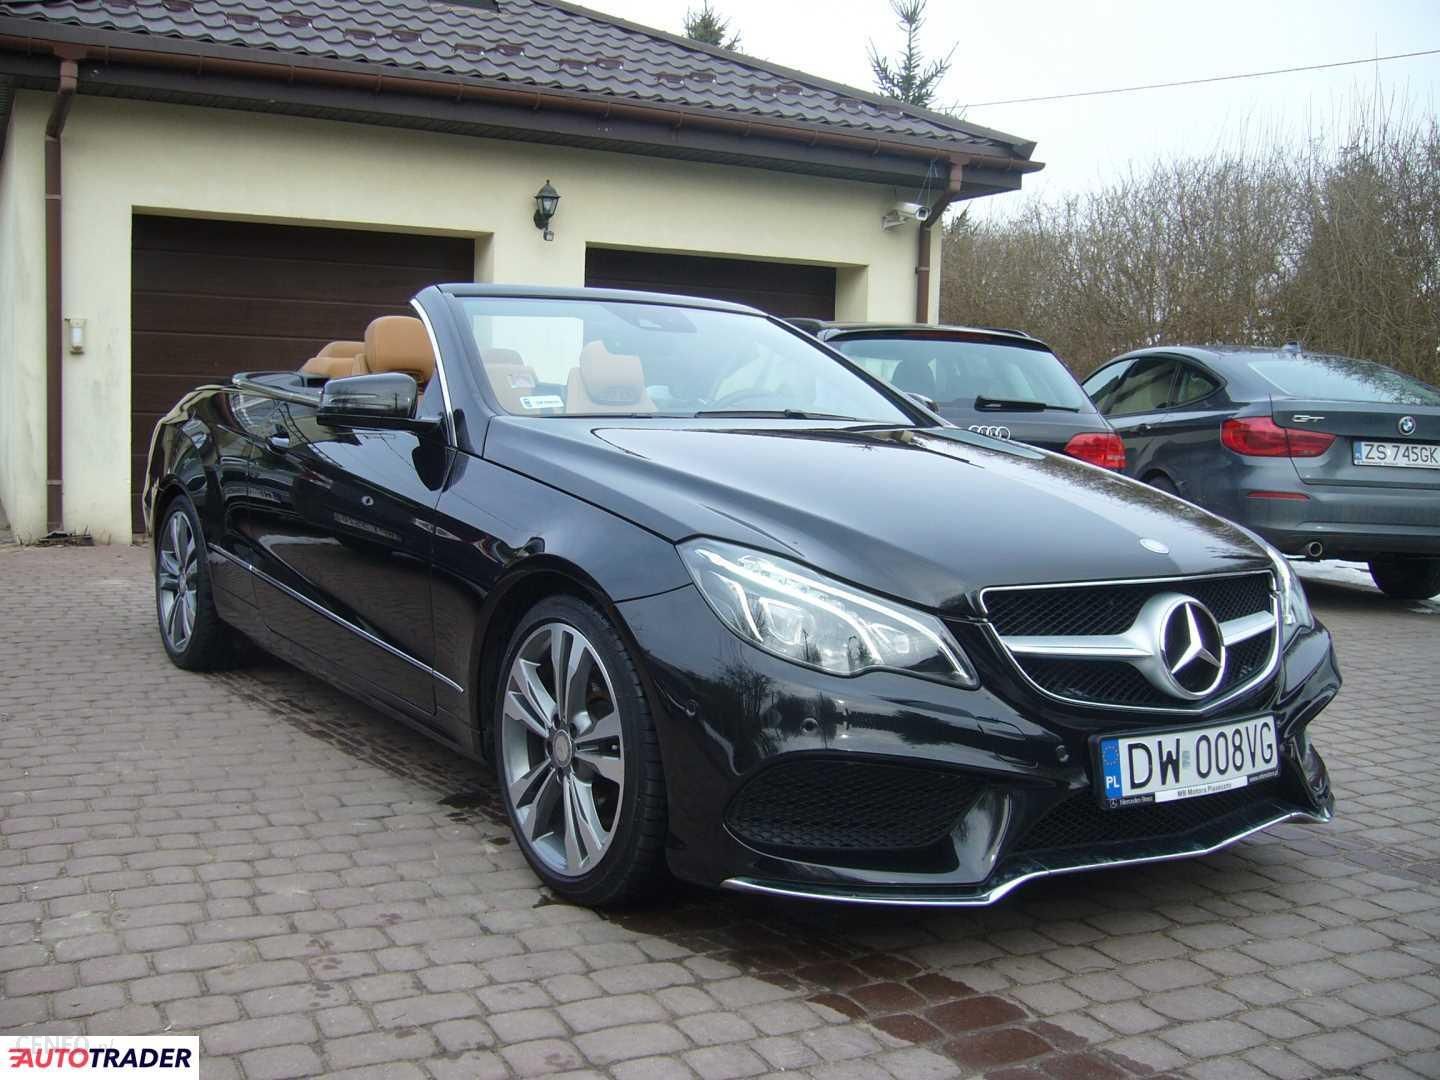 Mercedes Eklasa 2014 184KM kabriolet czarny Opinie i